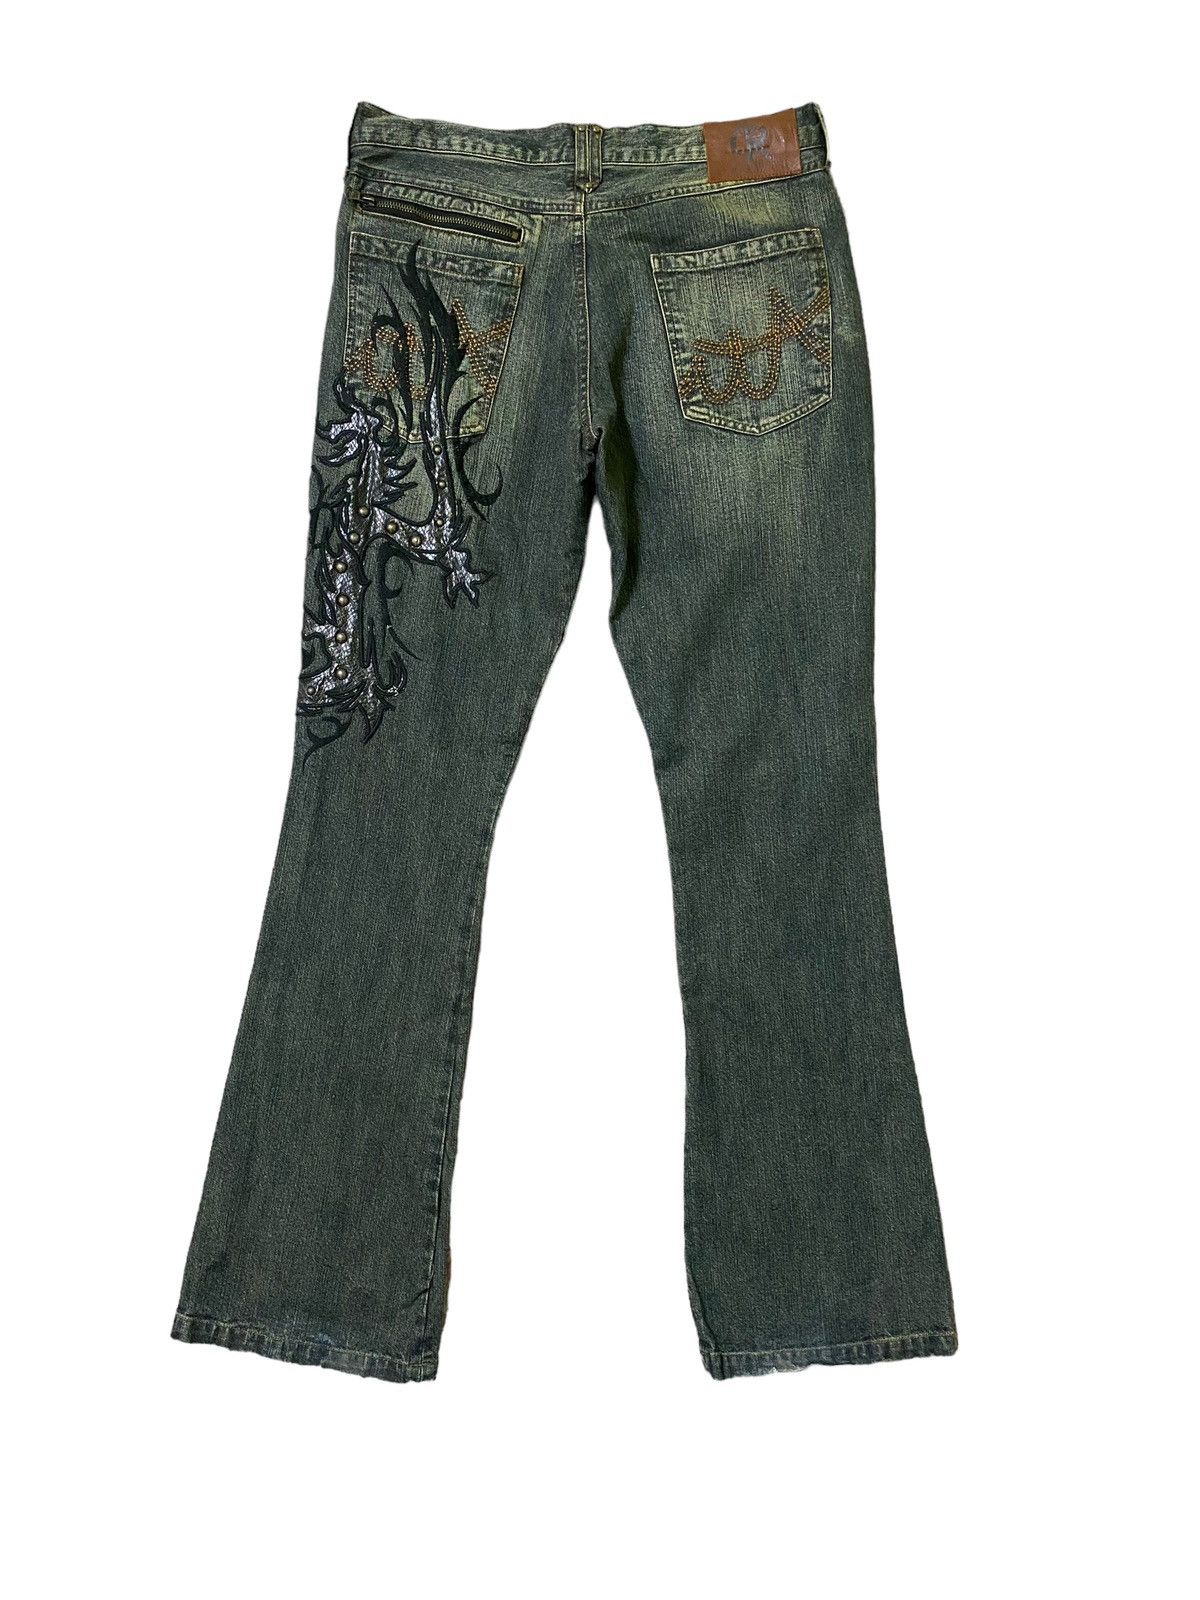 mxxshopin the attic damage design denim jeans